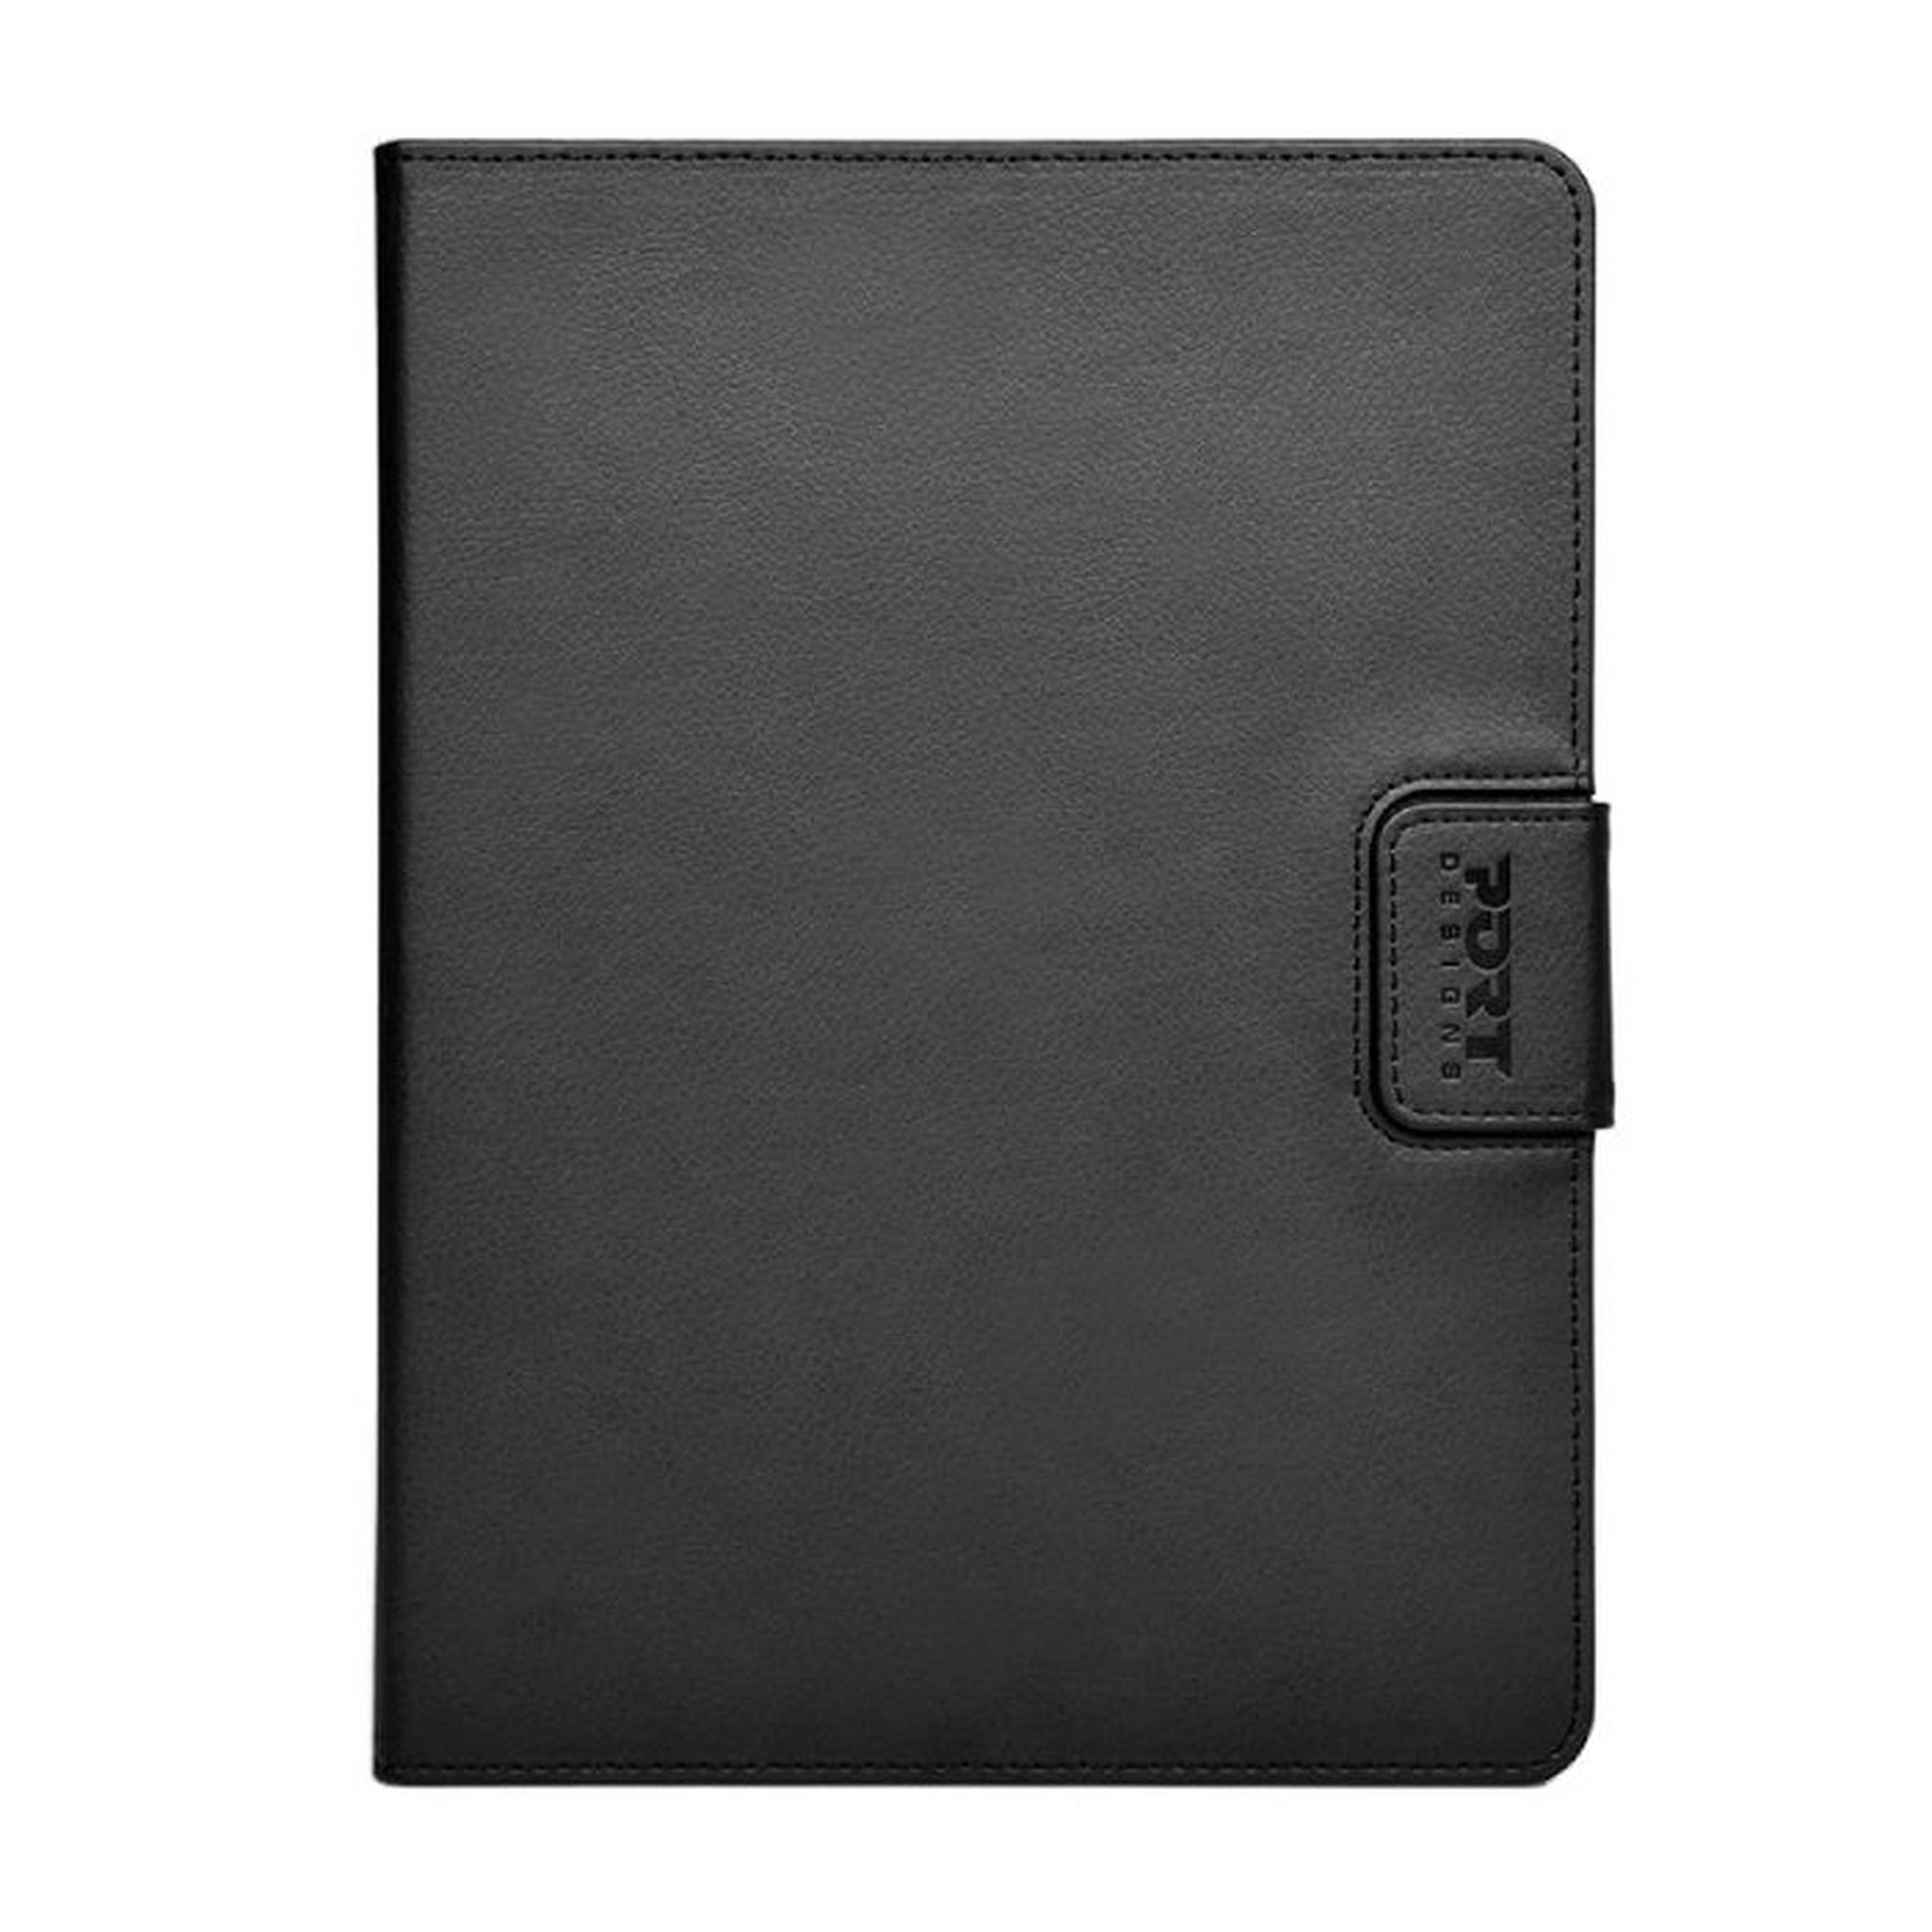 Port Muskoka 10.2 inch Apple iPad 2019 Tablet Case, 201412 – Black